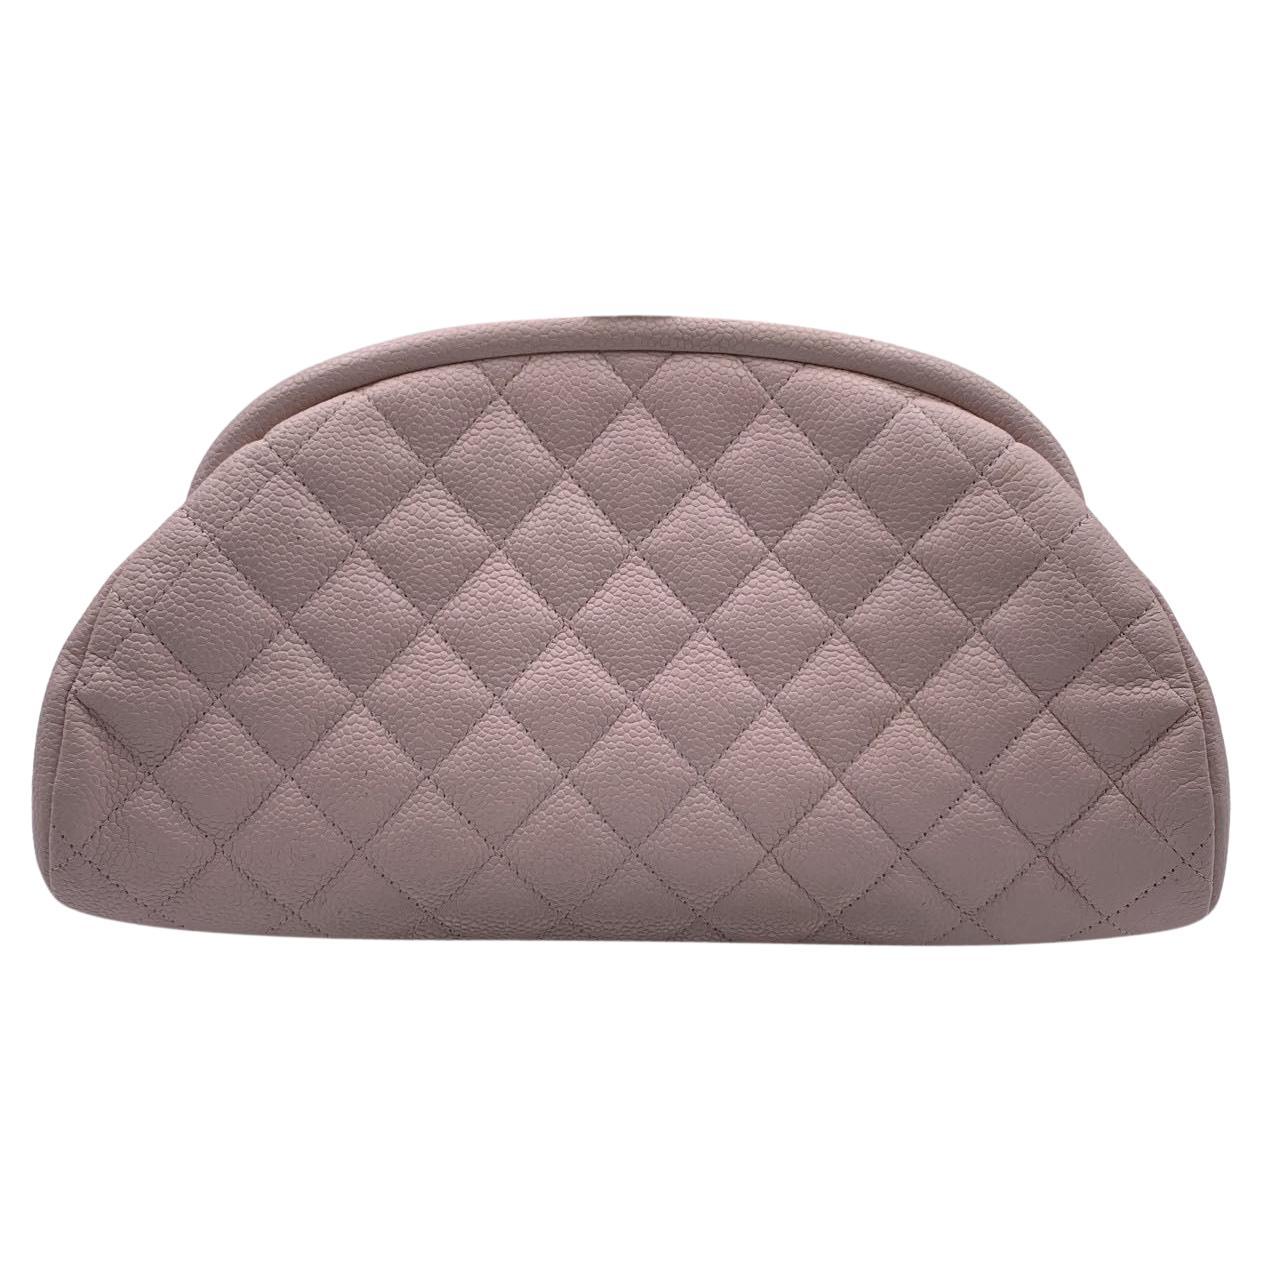 Chanel Pink Caviar Leather Timeless Clutch Bag Handbag